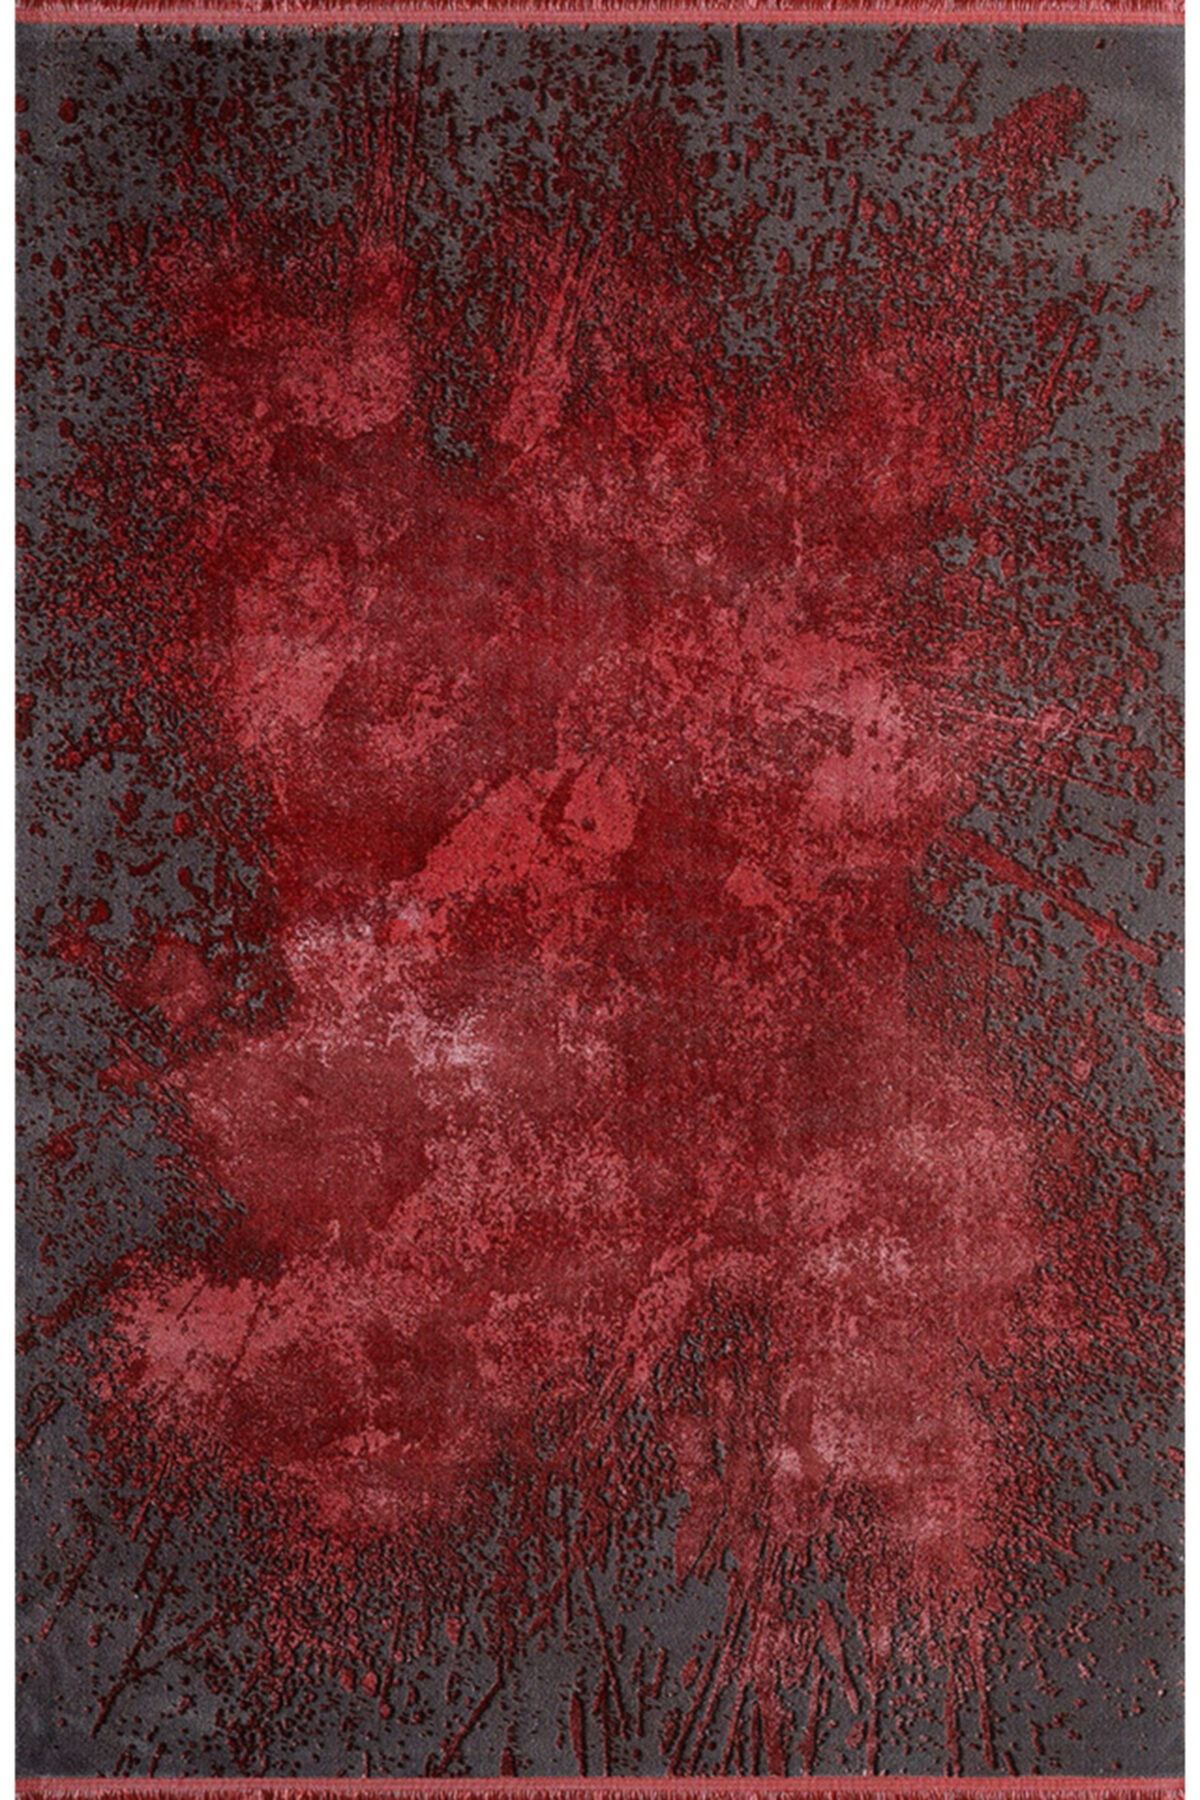 Pierre Cardin Kırmızı Magnifique Koleksiyonu Halı Mq48m 160x230 cm